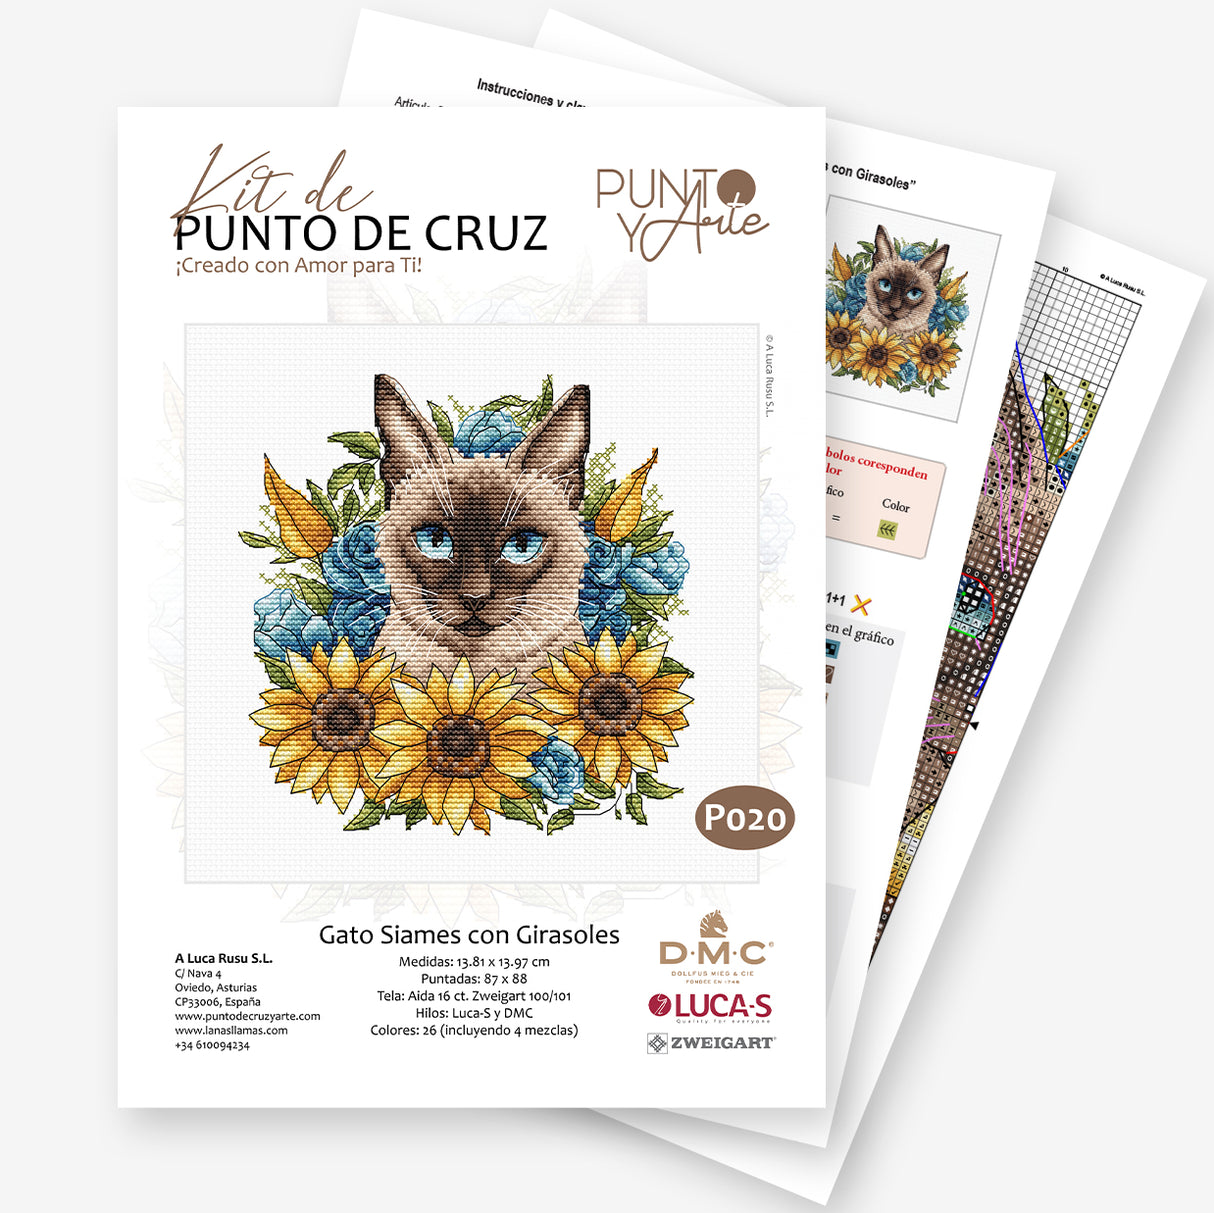 Kit de Punto de Cruz - Gato Siames con Girasoles - P020 Punto y Arte